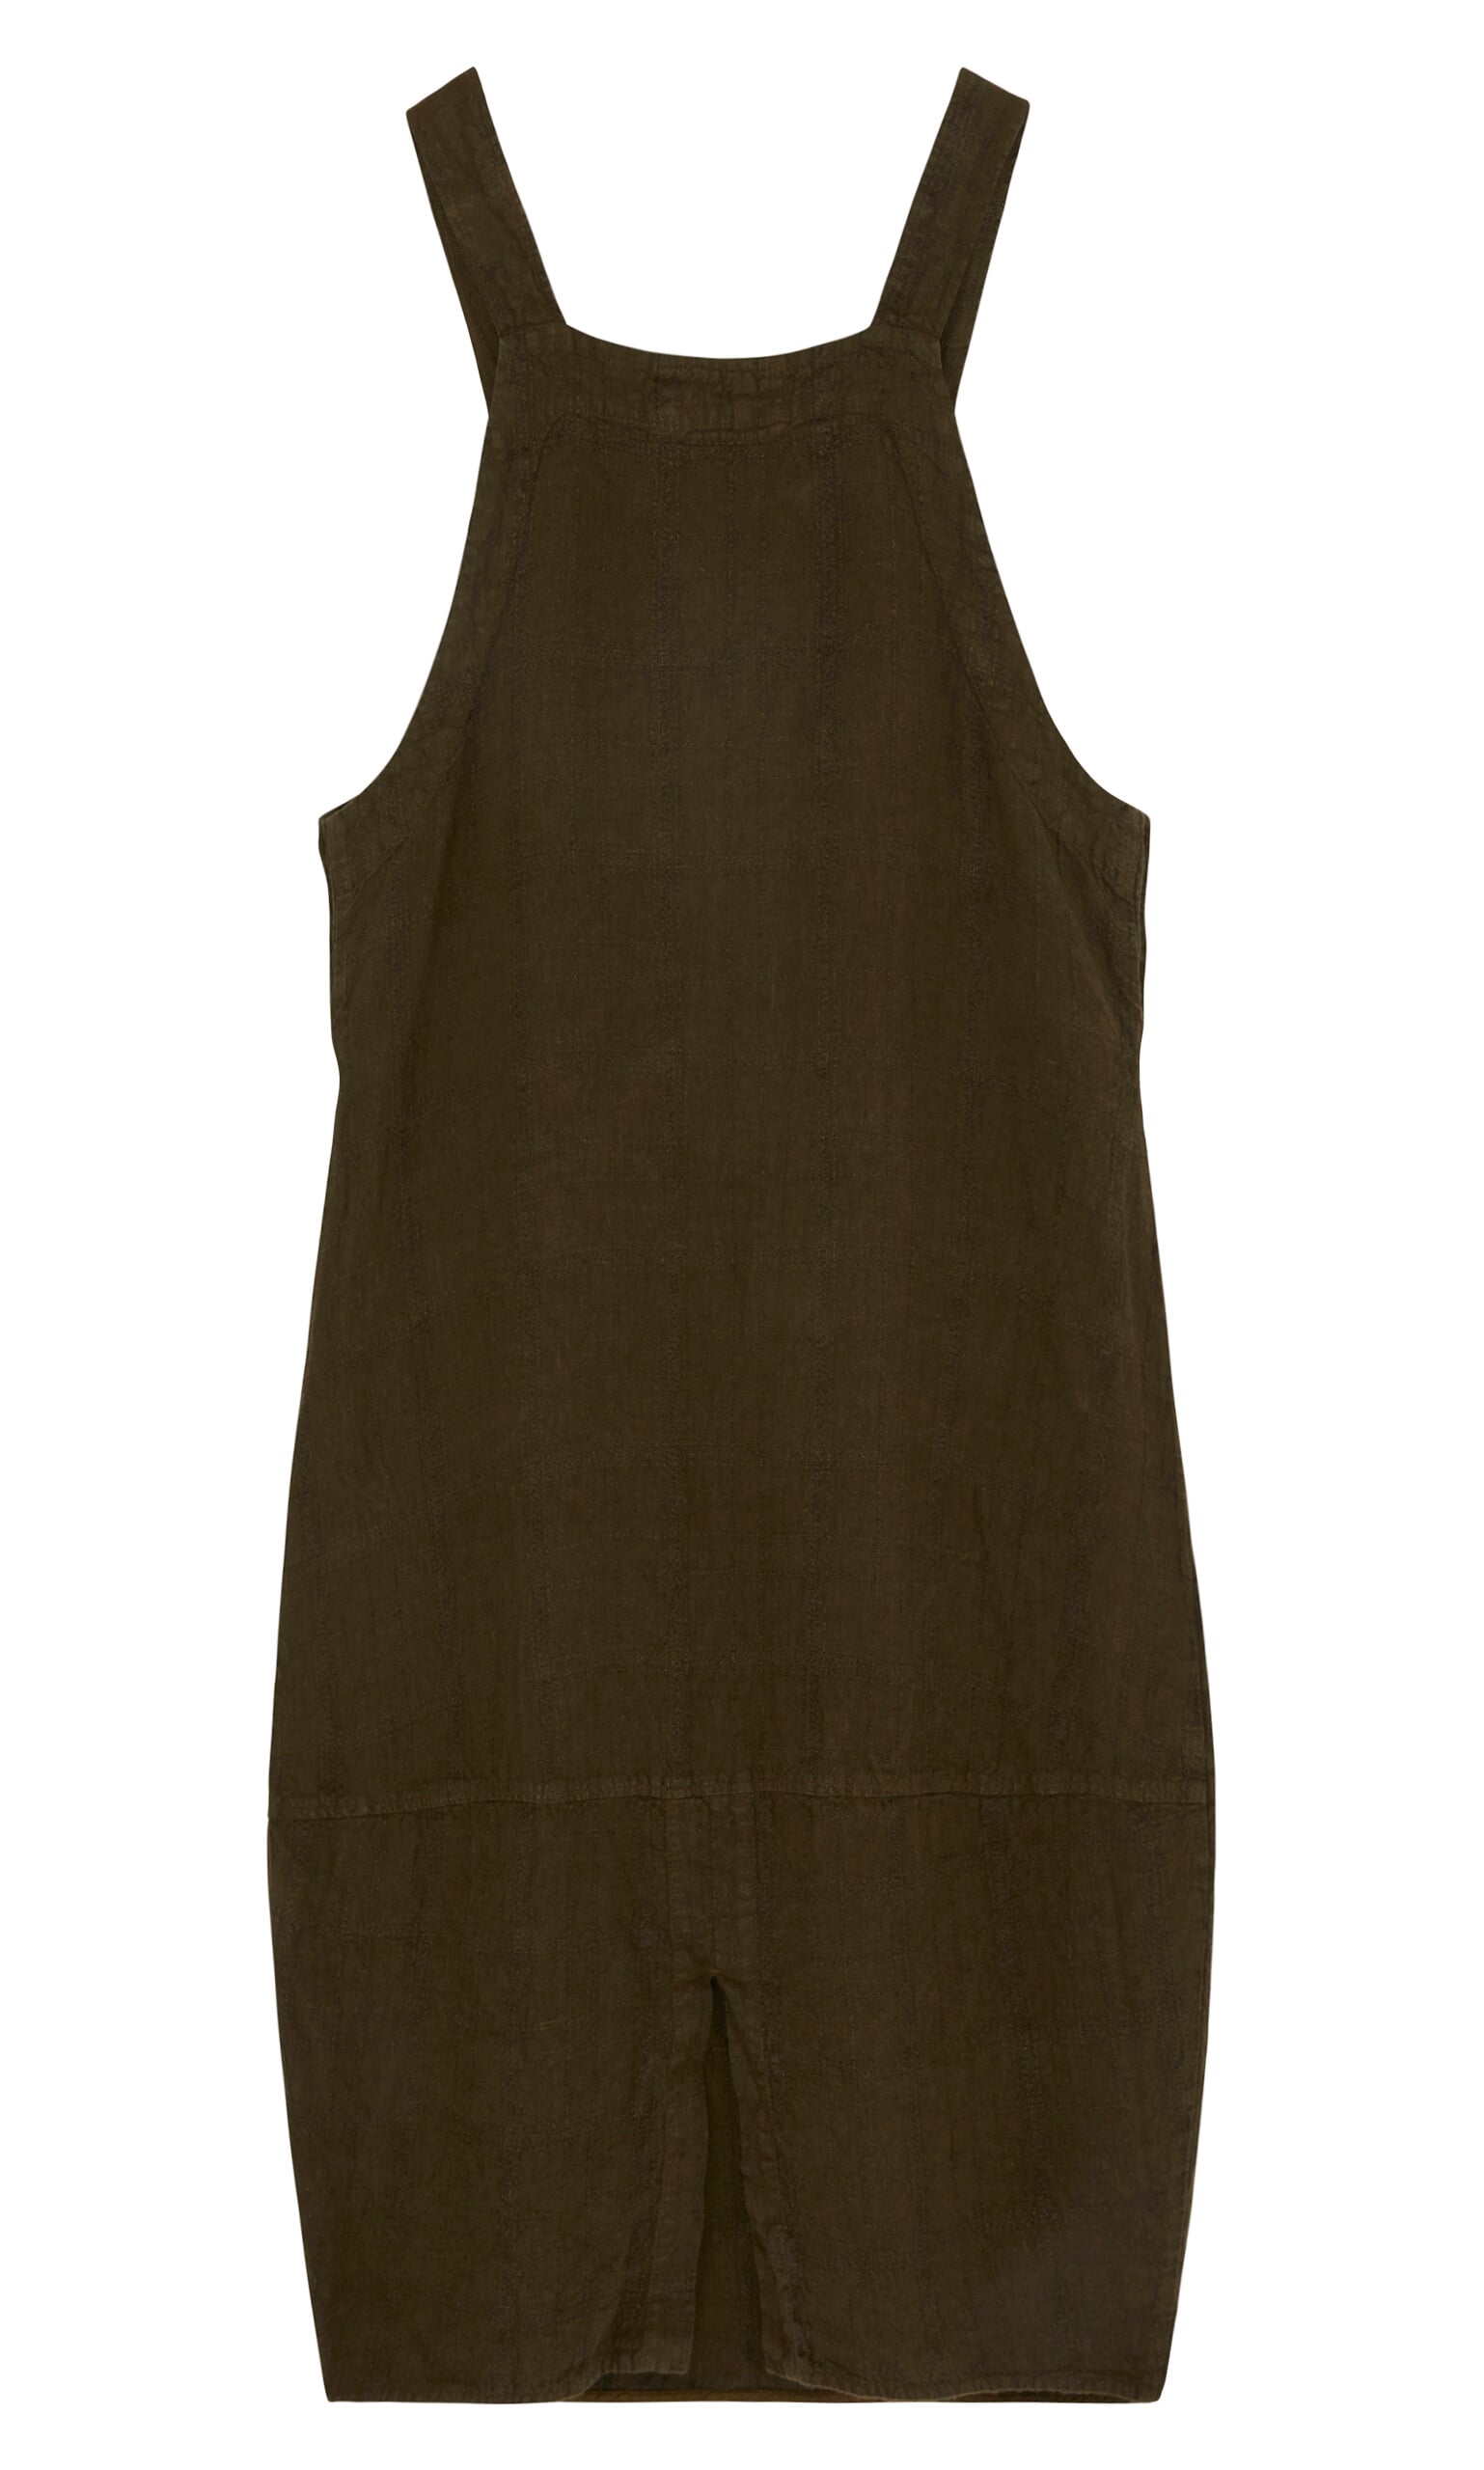 Gardeners dungaree dress - Plümo Ltd